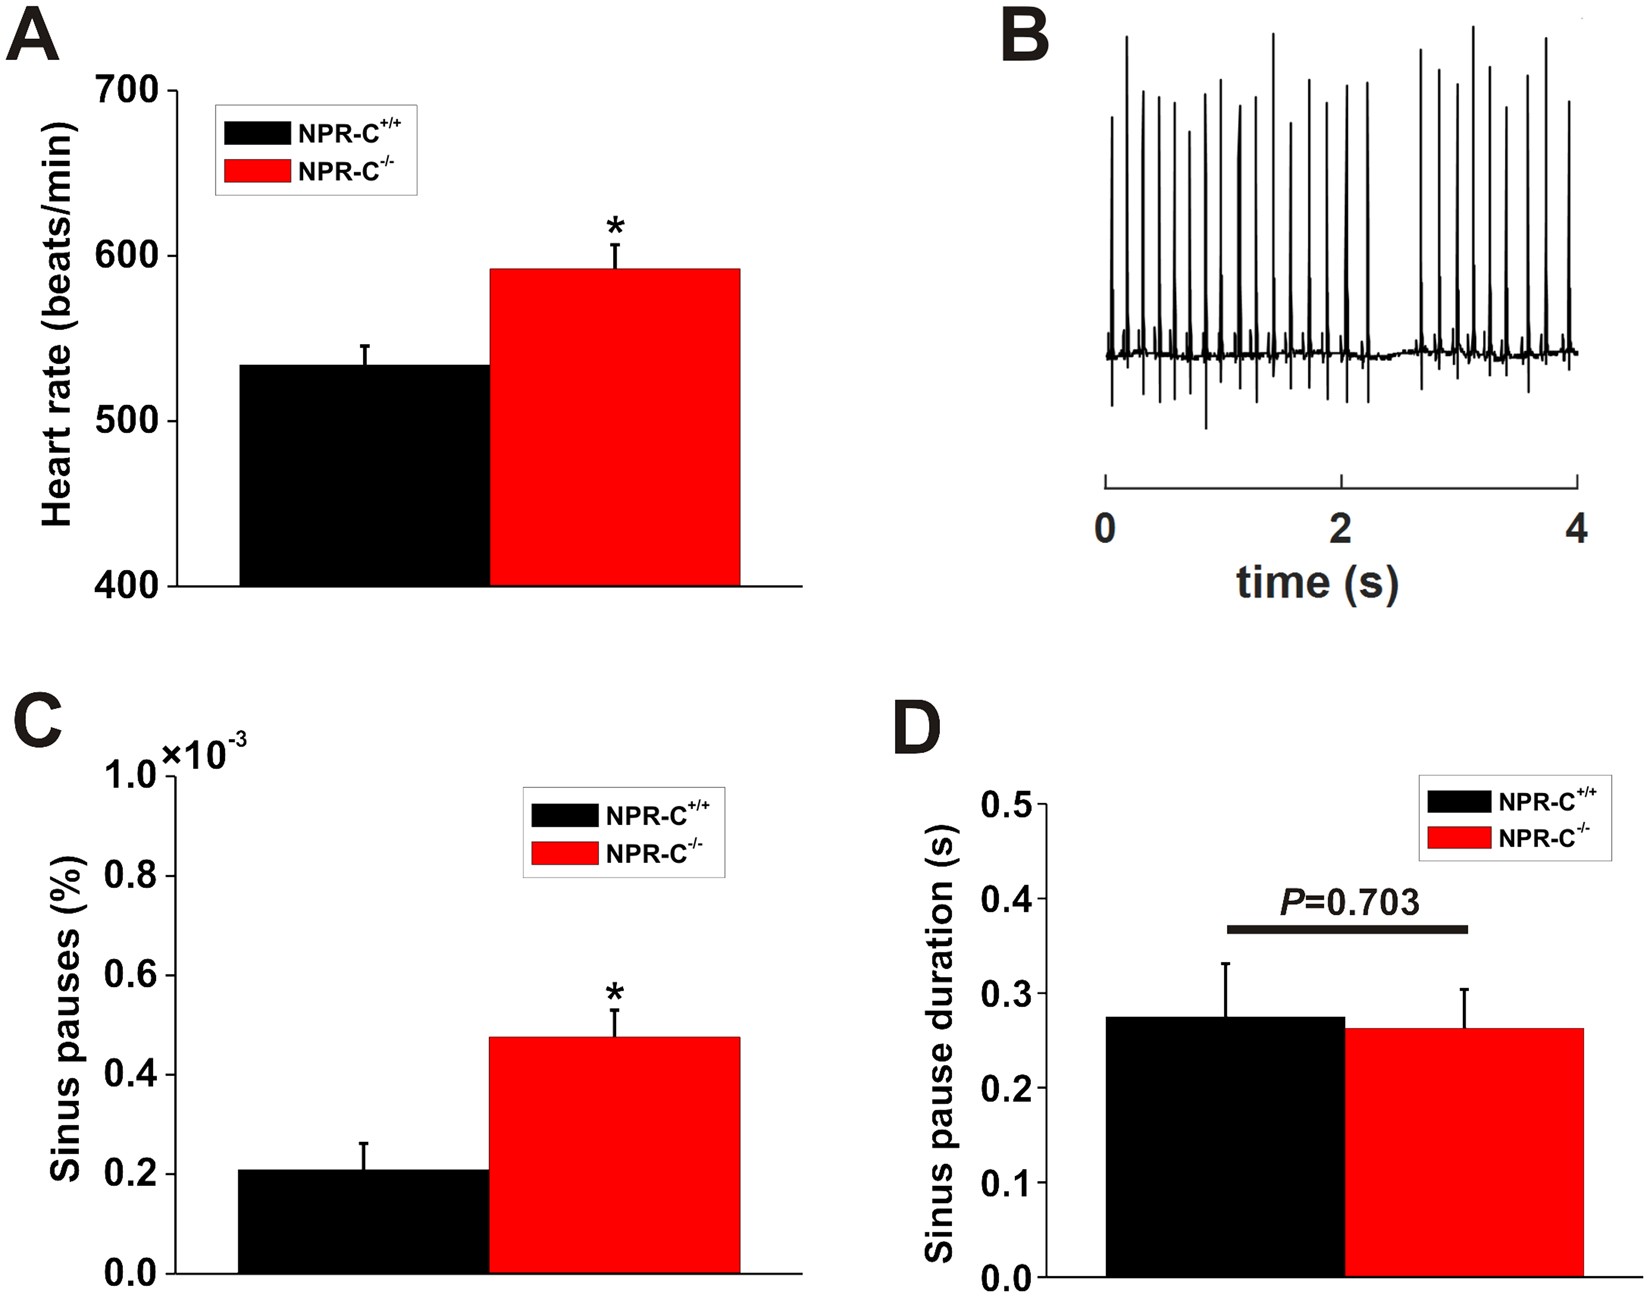 heart by the autonomic nervous system in mice lacking natriuretic peptide receptor (NPR-C) | Scientific Reports